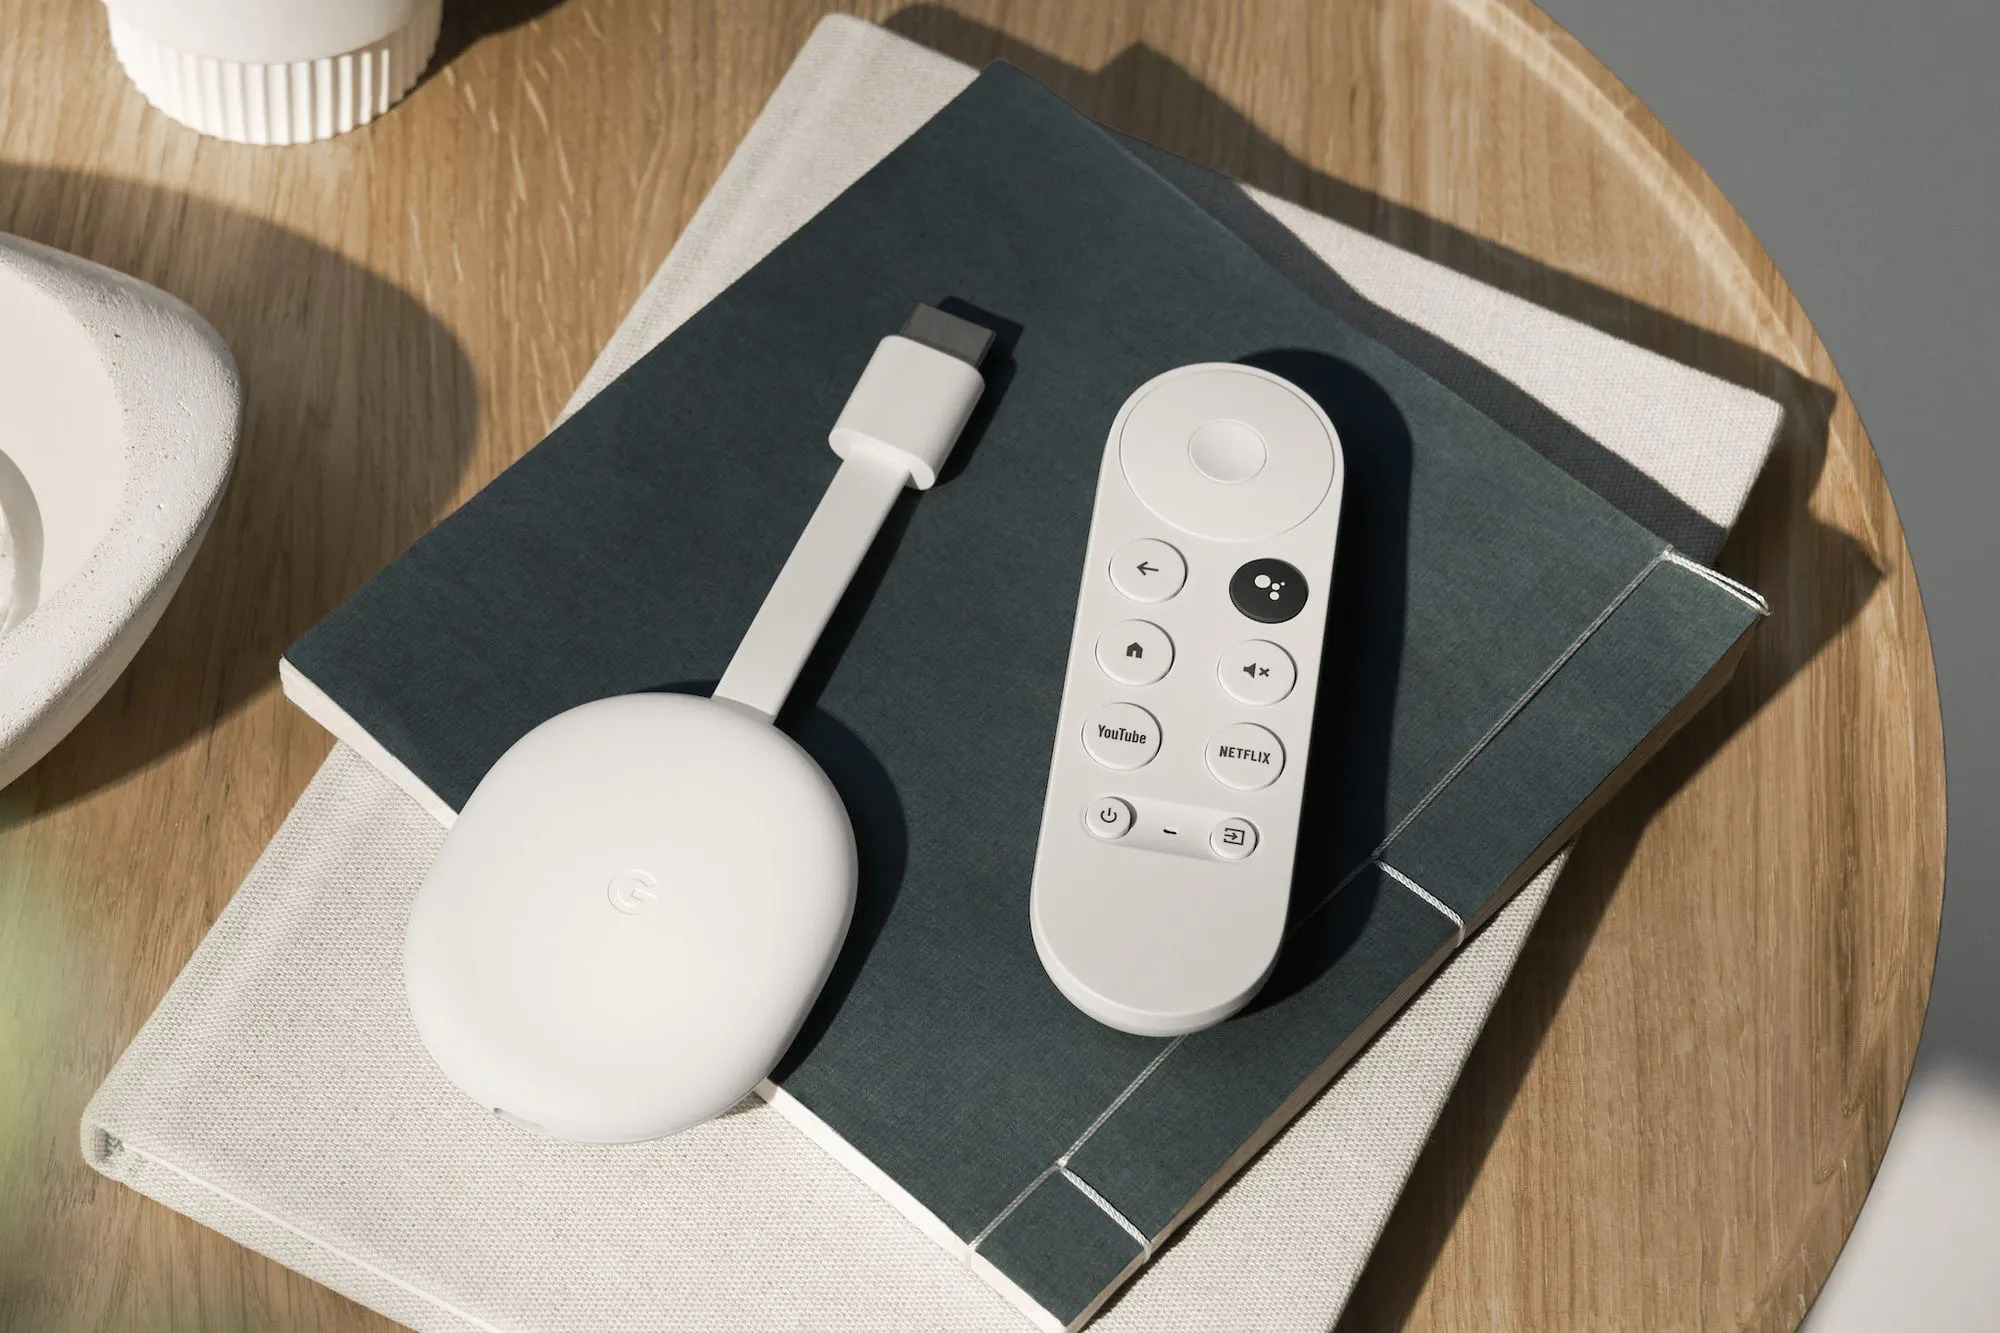 Limited time deal: Chromecast with Google TV (HD) на Amazon со скидкой 33%